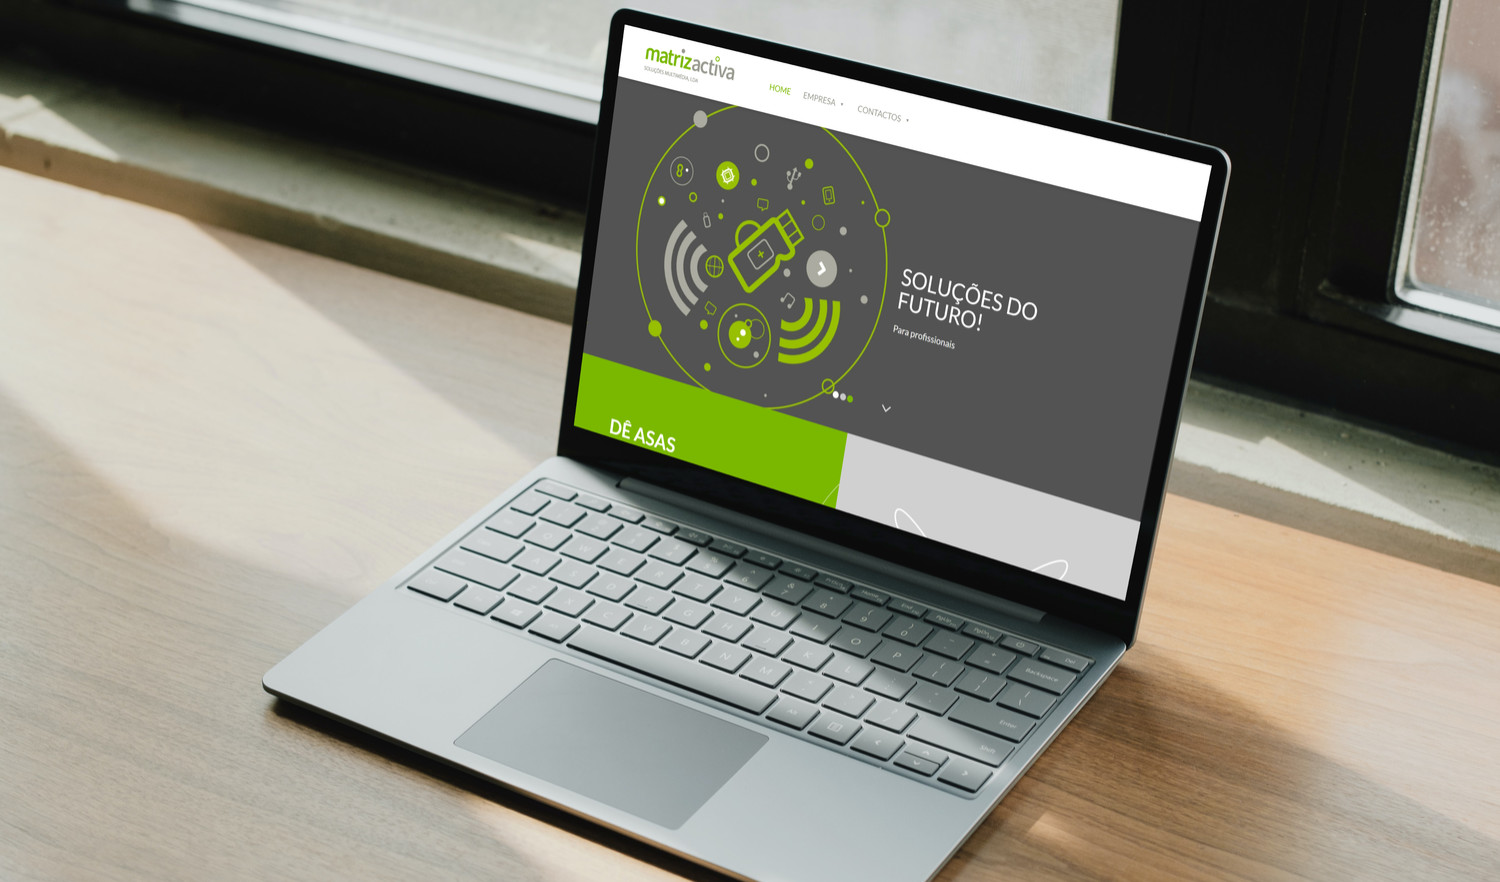 Website Matrizactiva - homepage - laptop